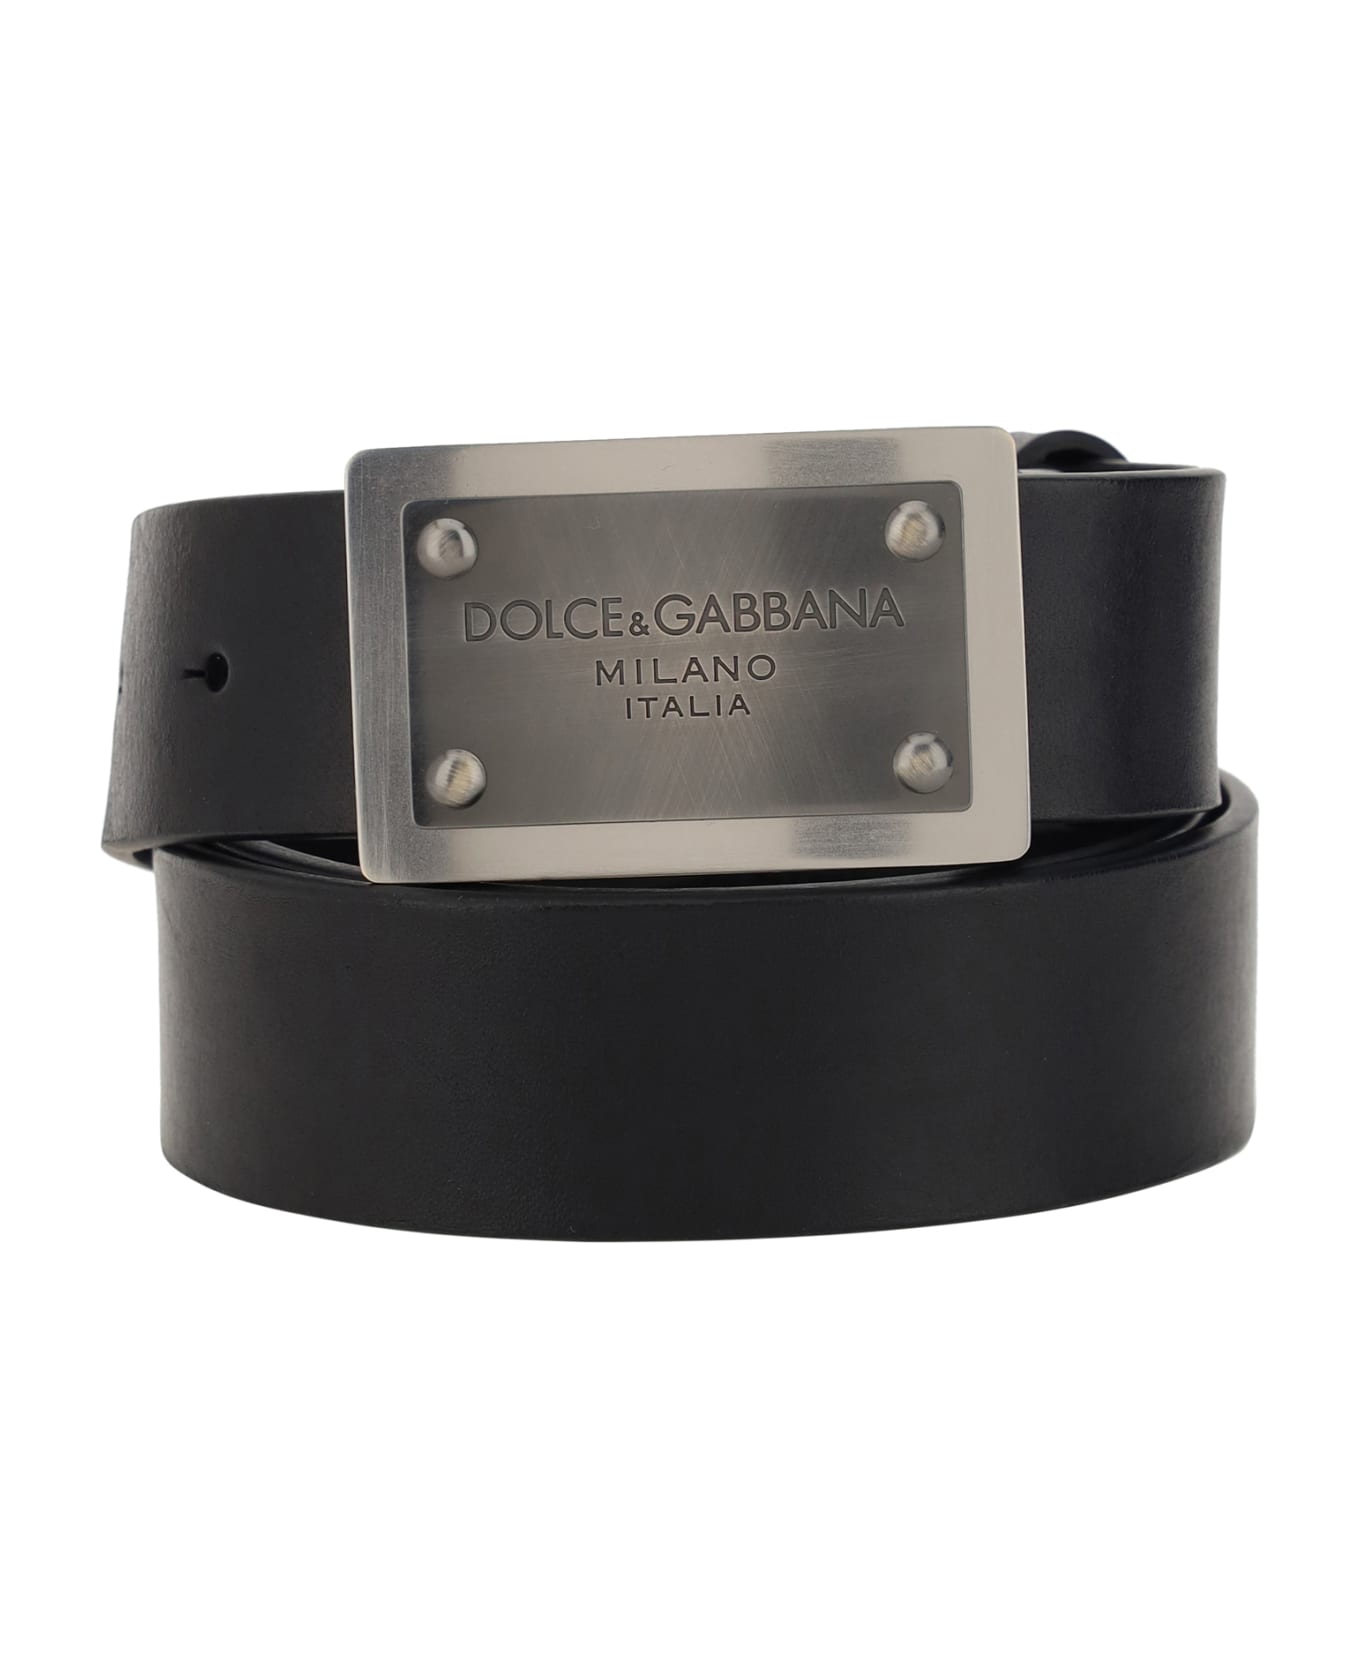 Dolce & Gabbana Classic Square Metal Buckled Belt - Nero/palladio